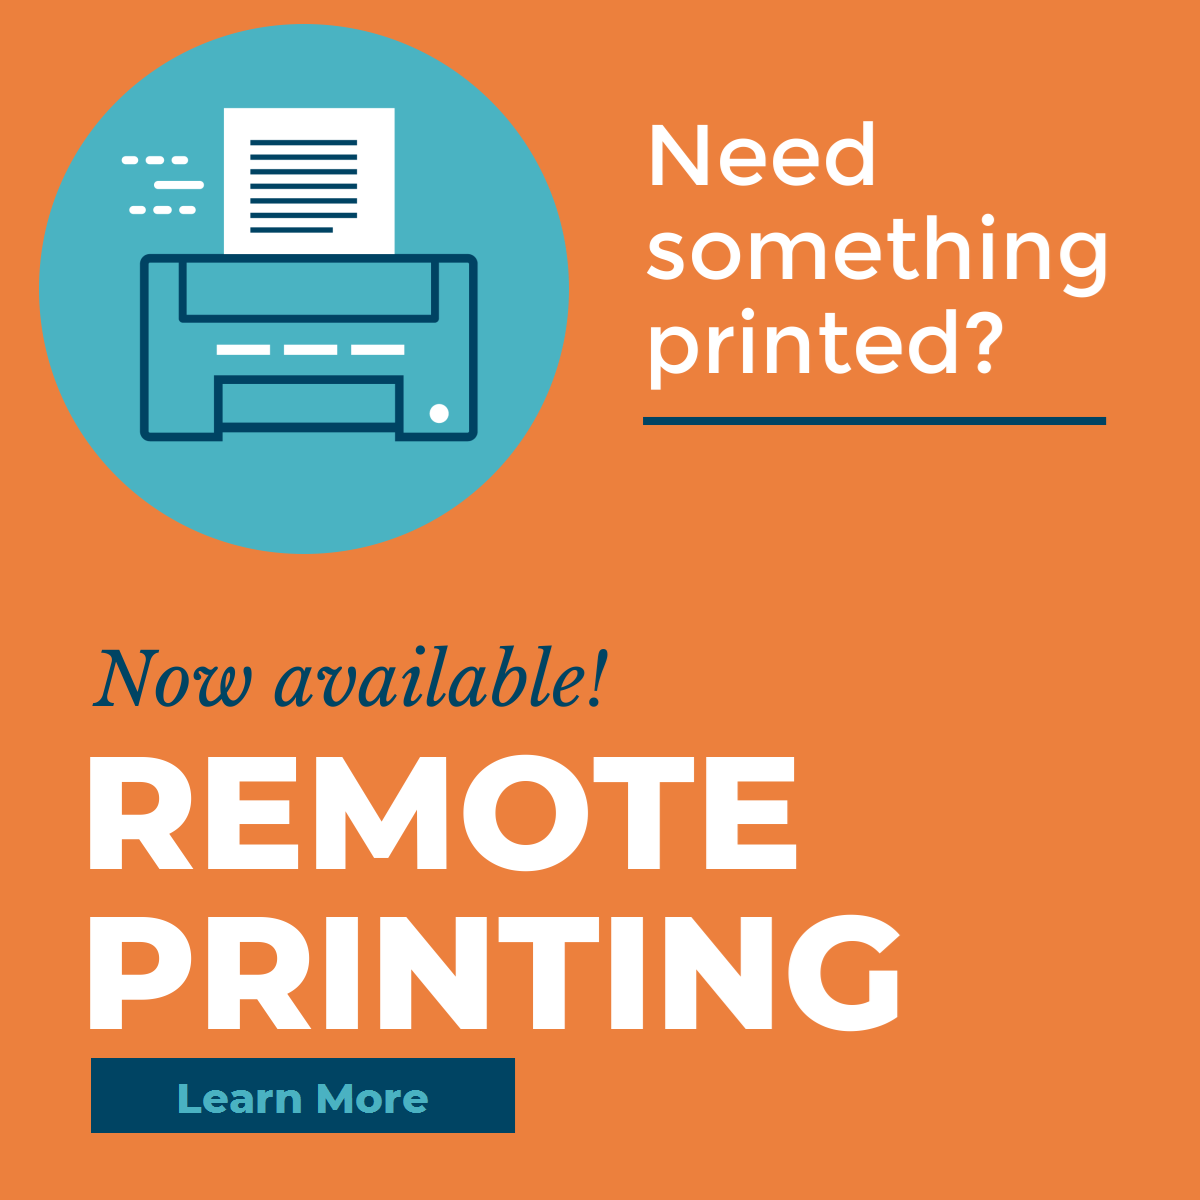 Remote Printing